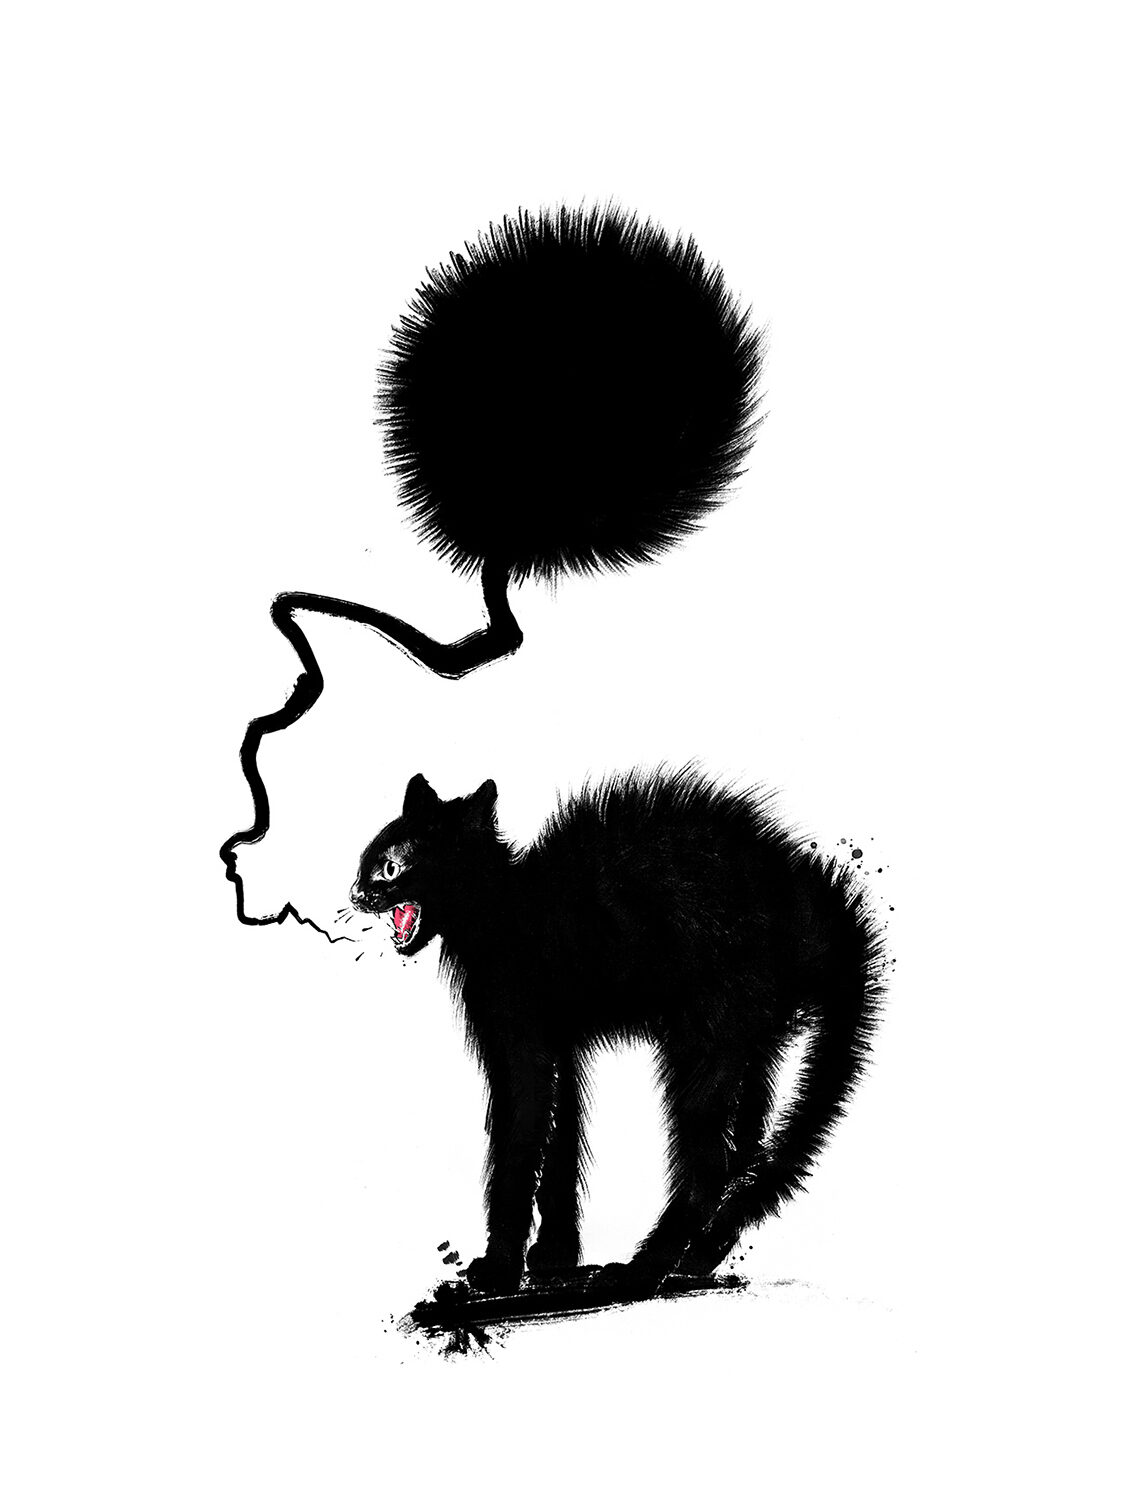 Buesi katze black cat Artwork drawing art illustration kornel ink gallery zeichnung kunst - Kornel Illustration | Kornel Stadler portfolio